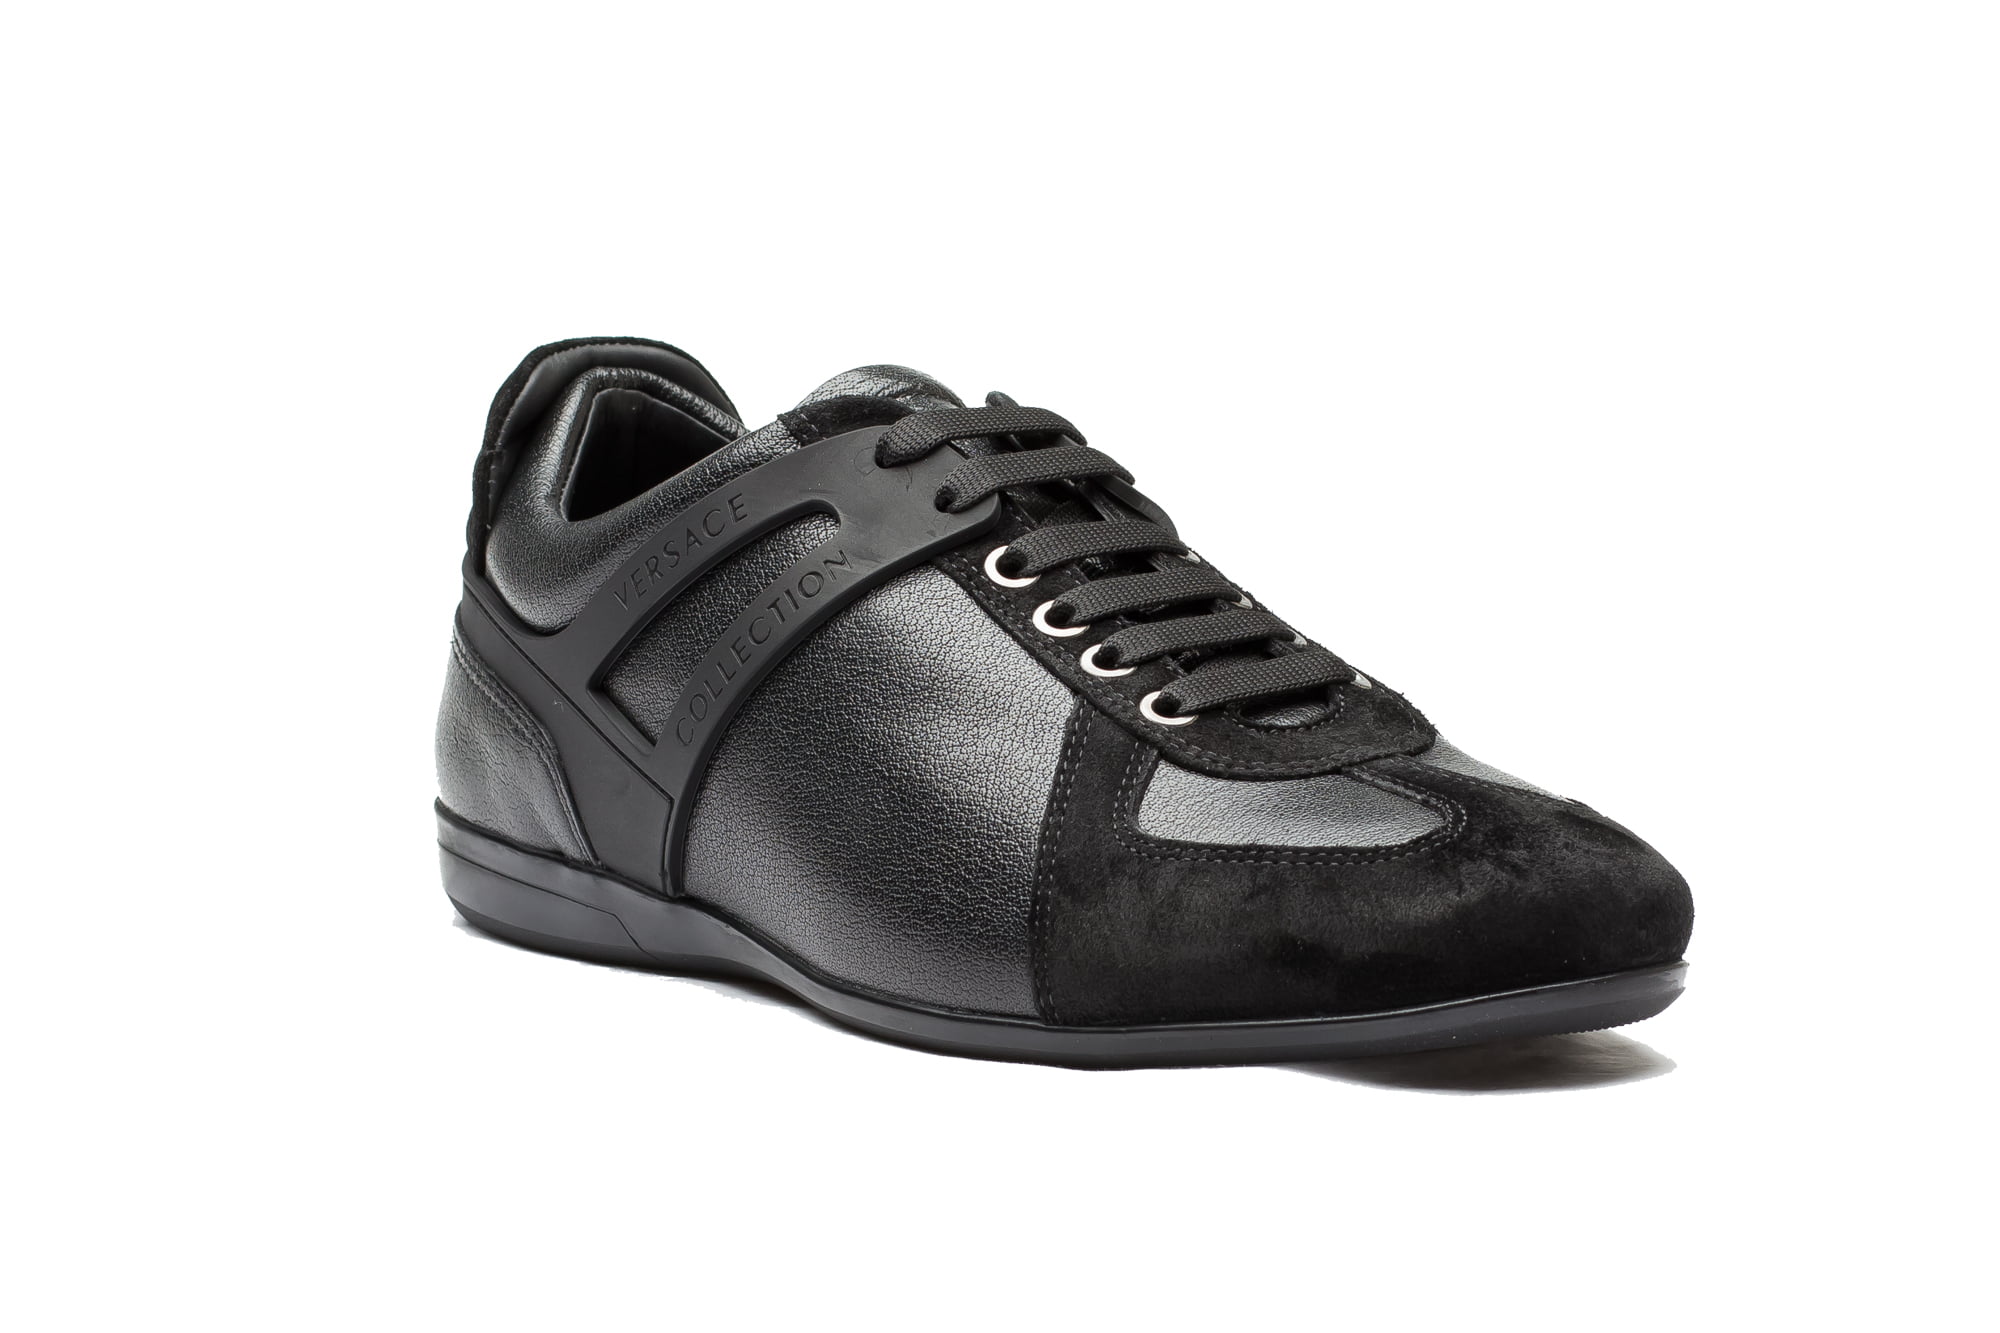 Versace - Versace Men's Leather Suede Low Top Sneakers Shoes Black ...